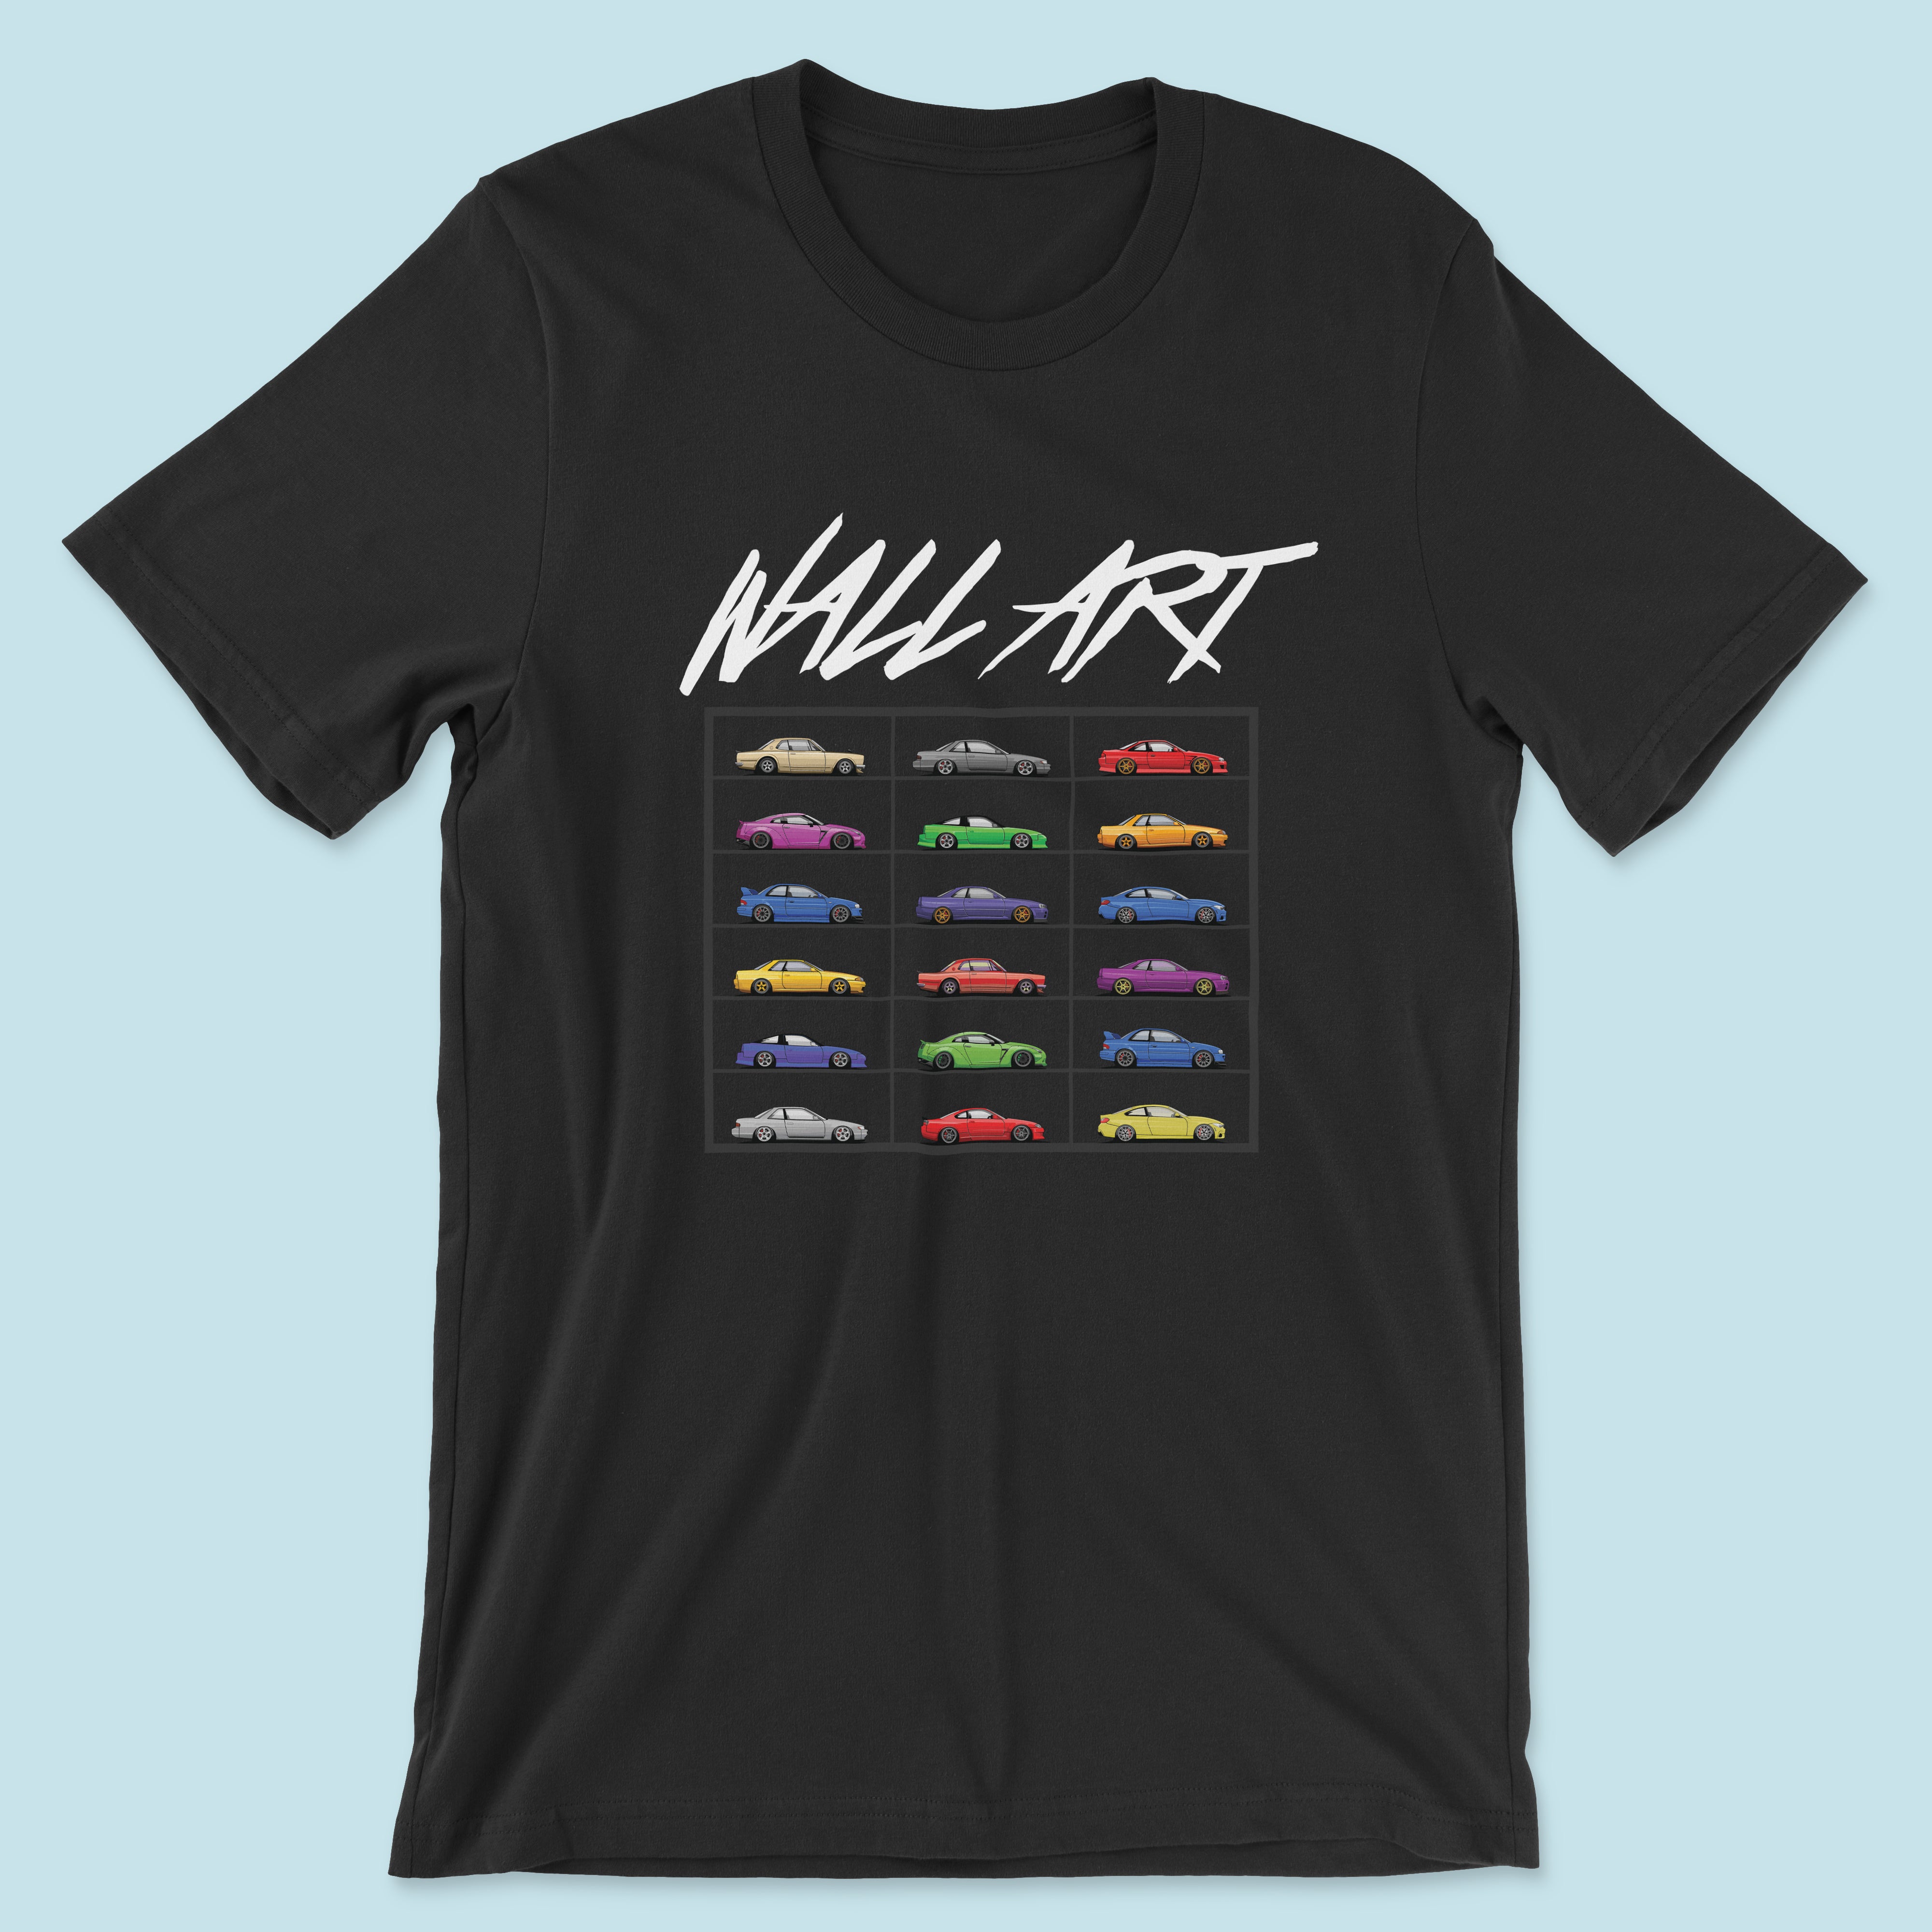 Diecast Collector T-Shirt, Car Wall Art Gift shirt, Toy car shirt, Model car shirt, Super Treasure Hunt Shirt | Hot Car with Rubber Wheels